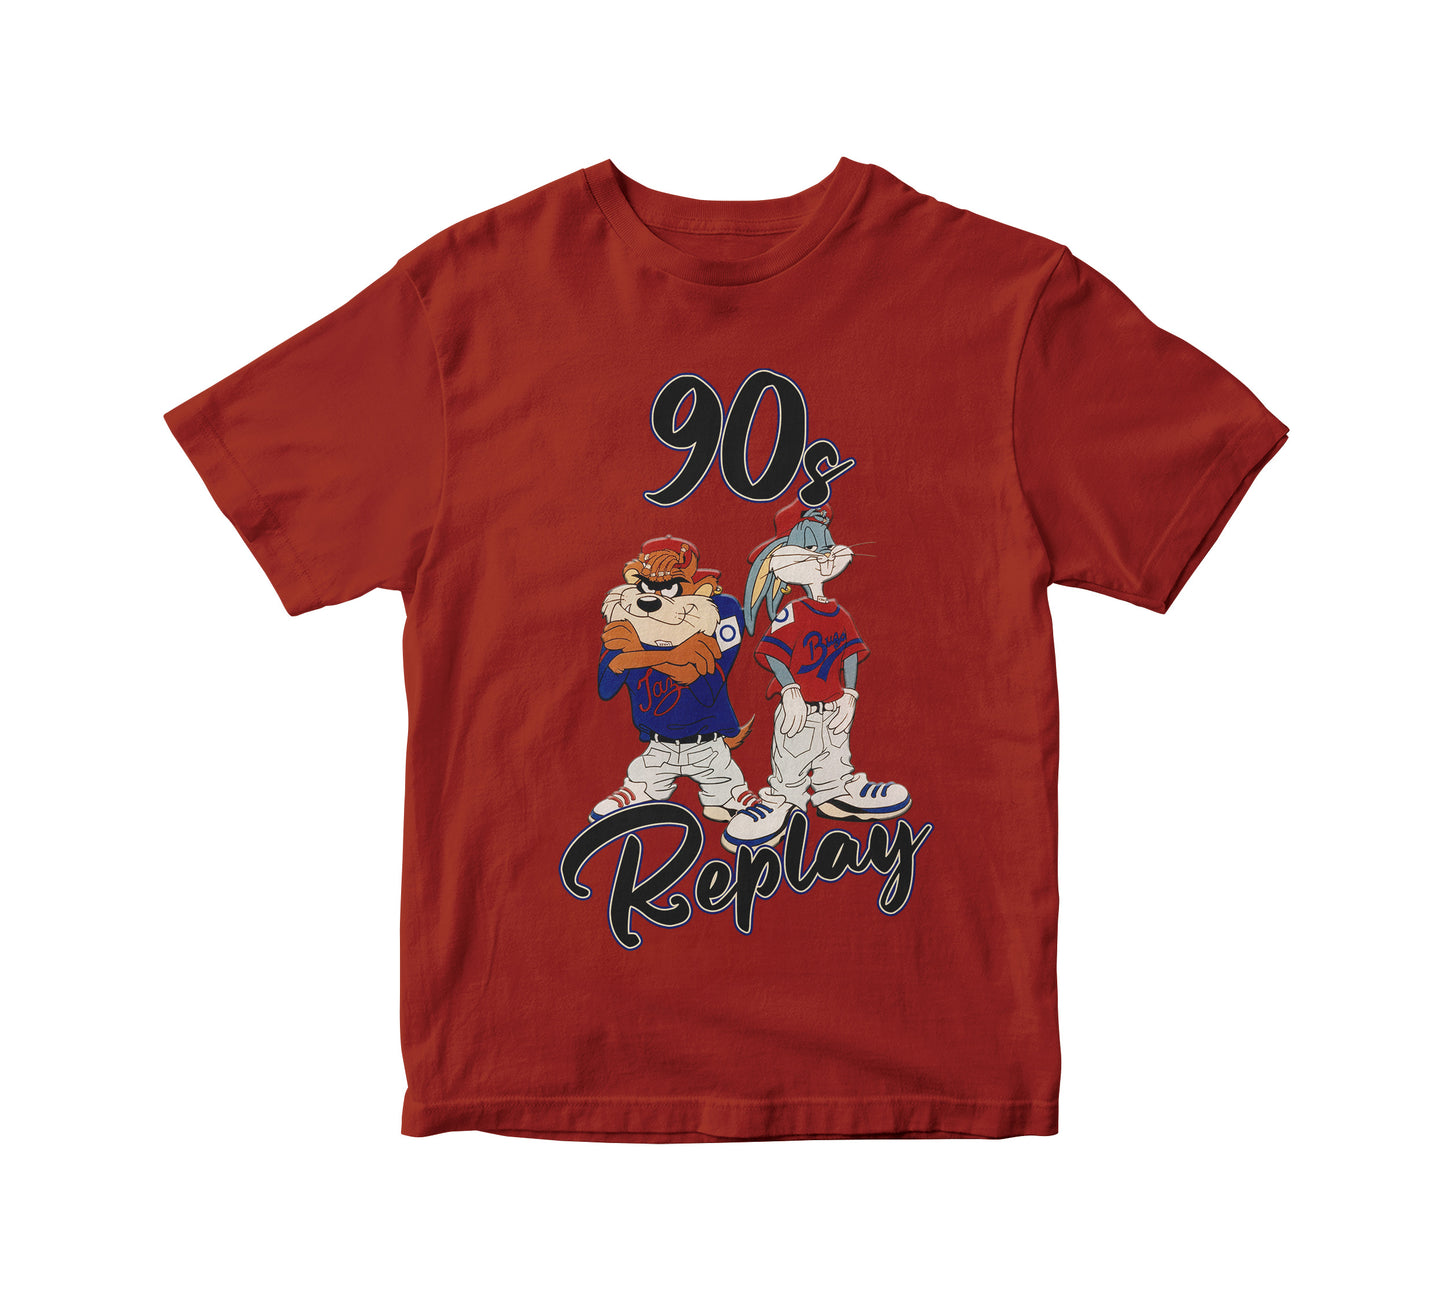 90s Replay Retro Adult Unisex T-Shirt